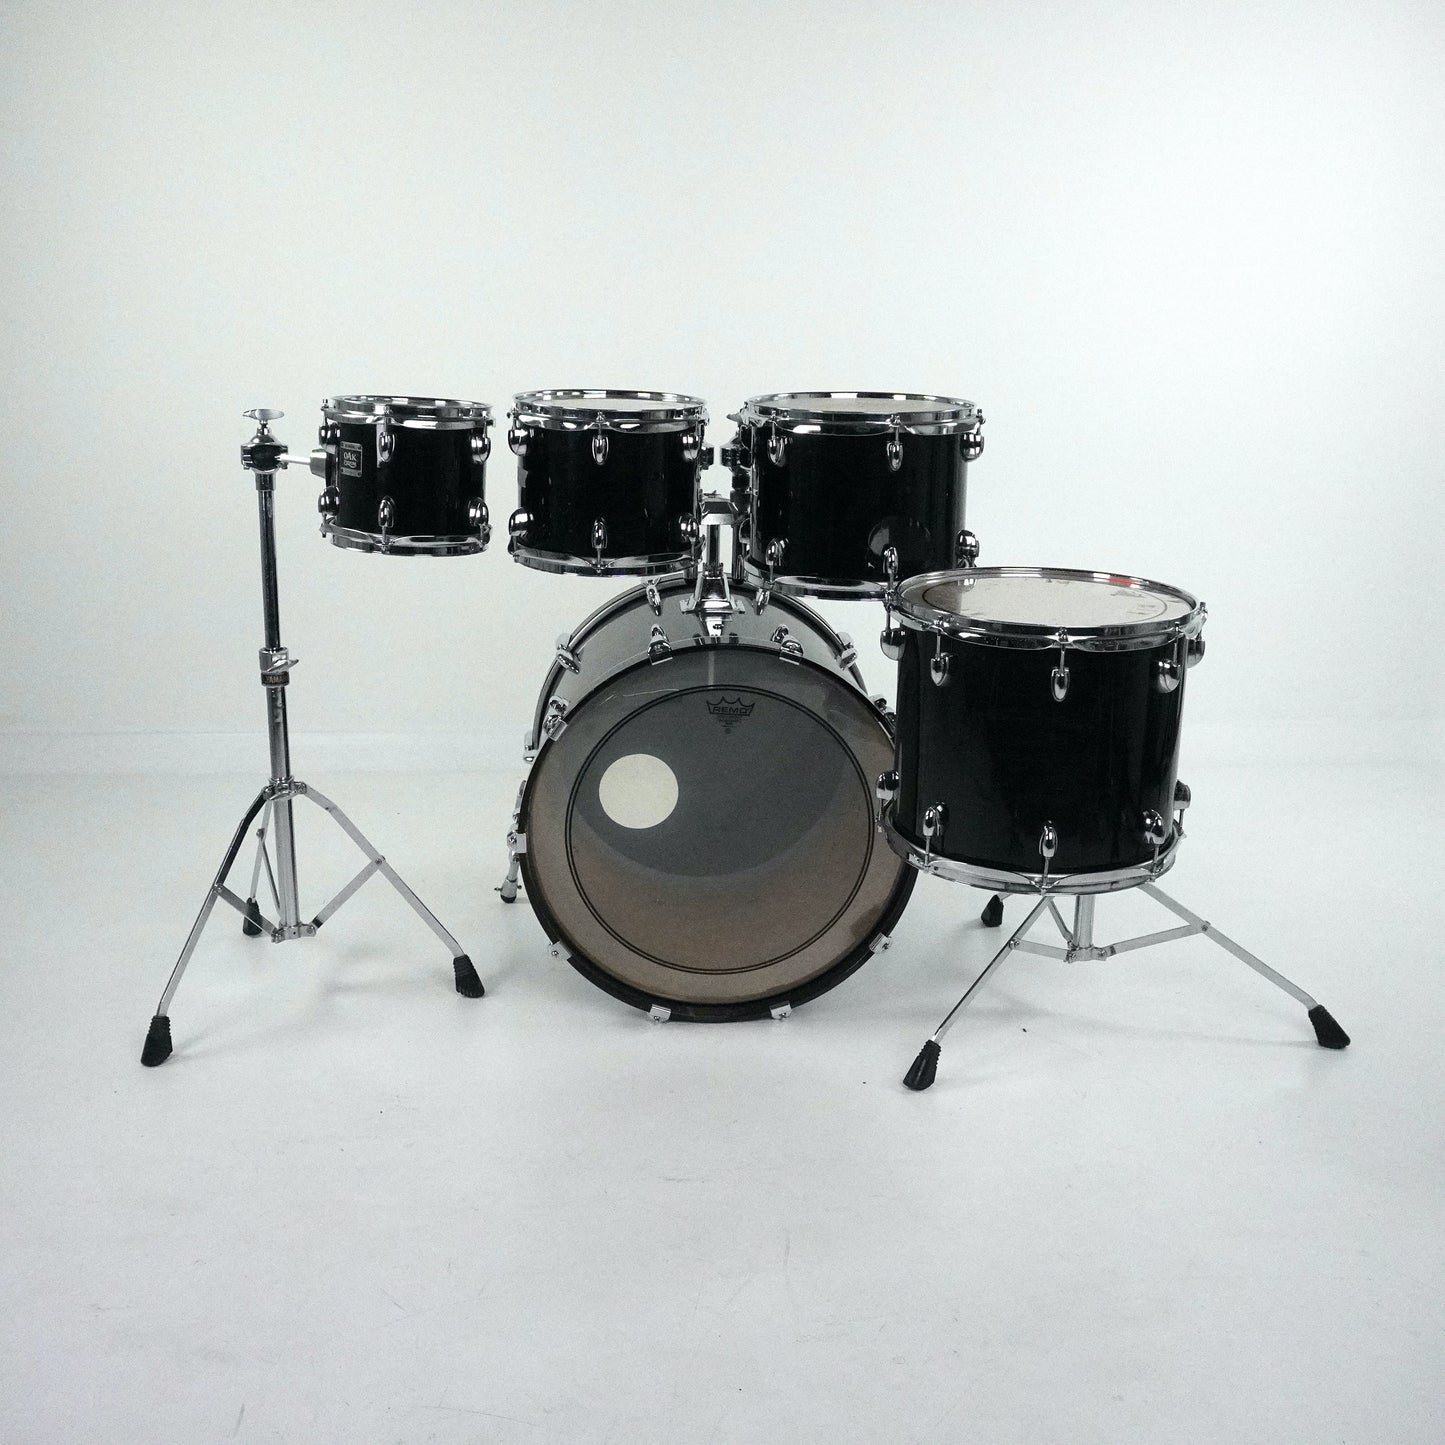 Yamaha Oak Custom 5-Piece Drum kit